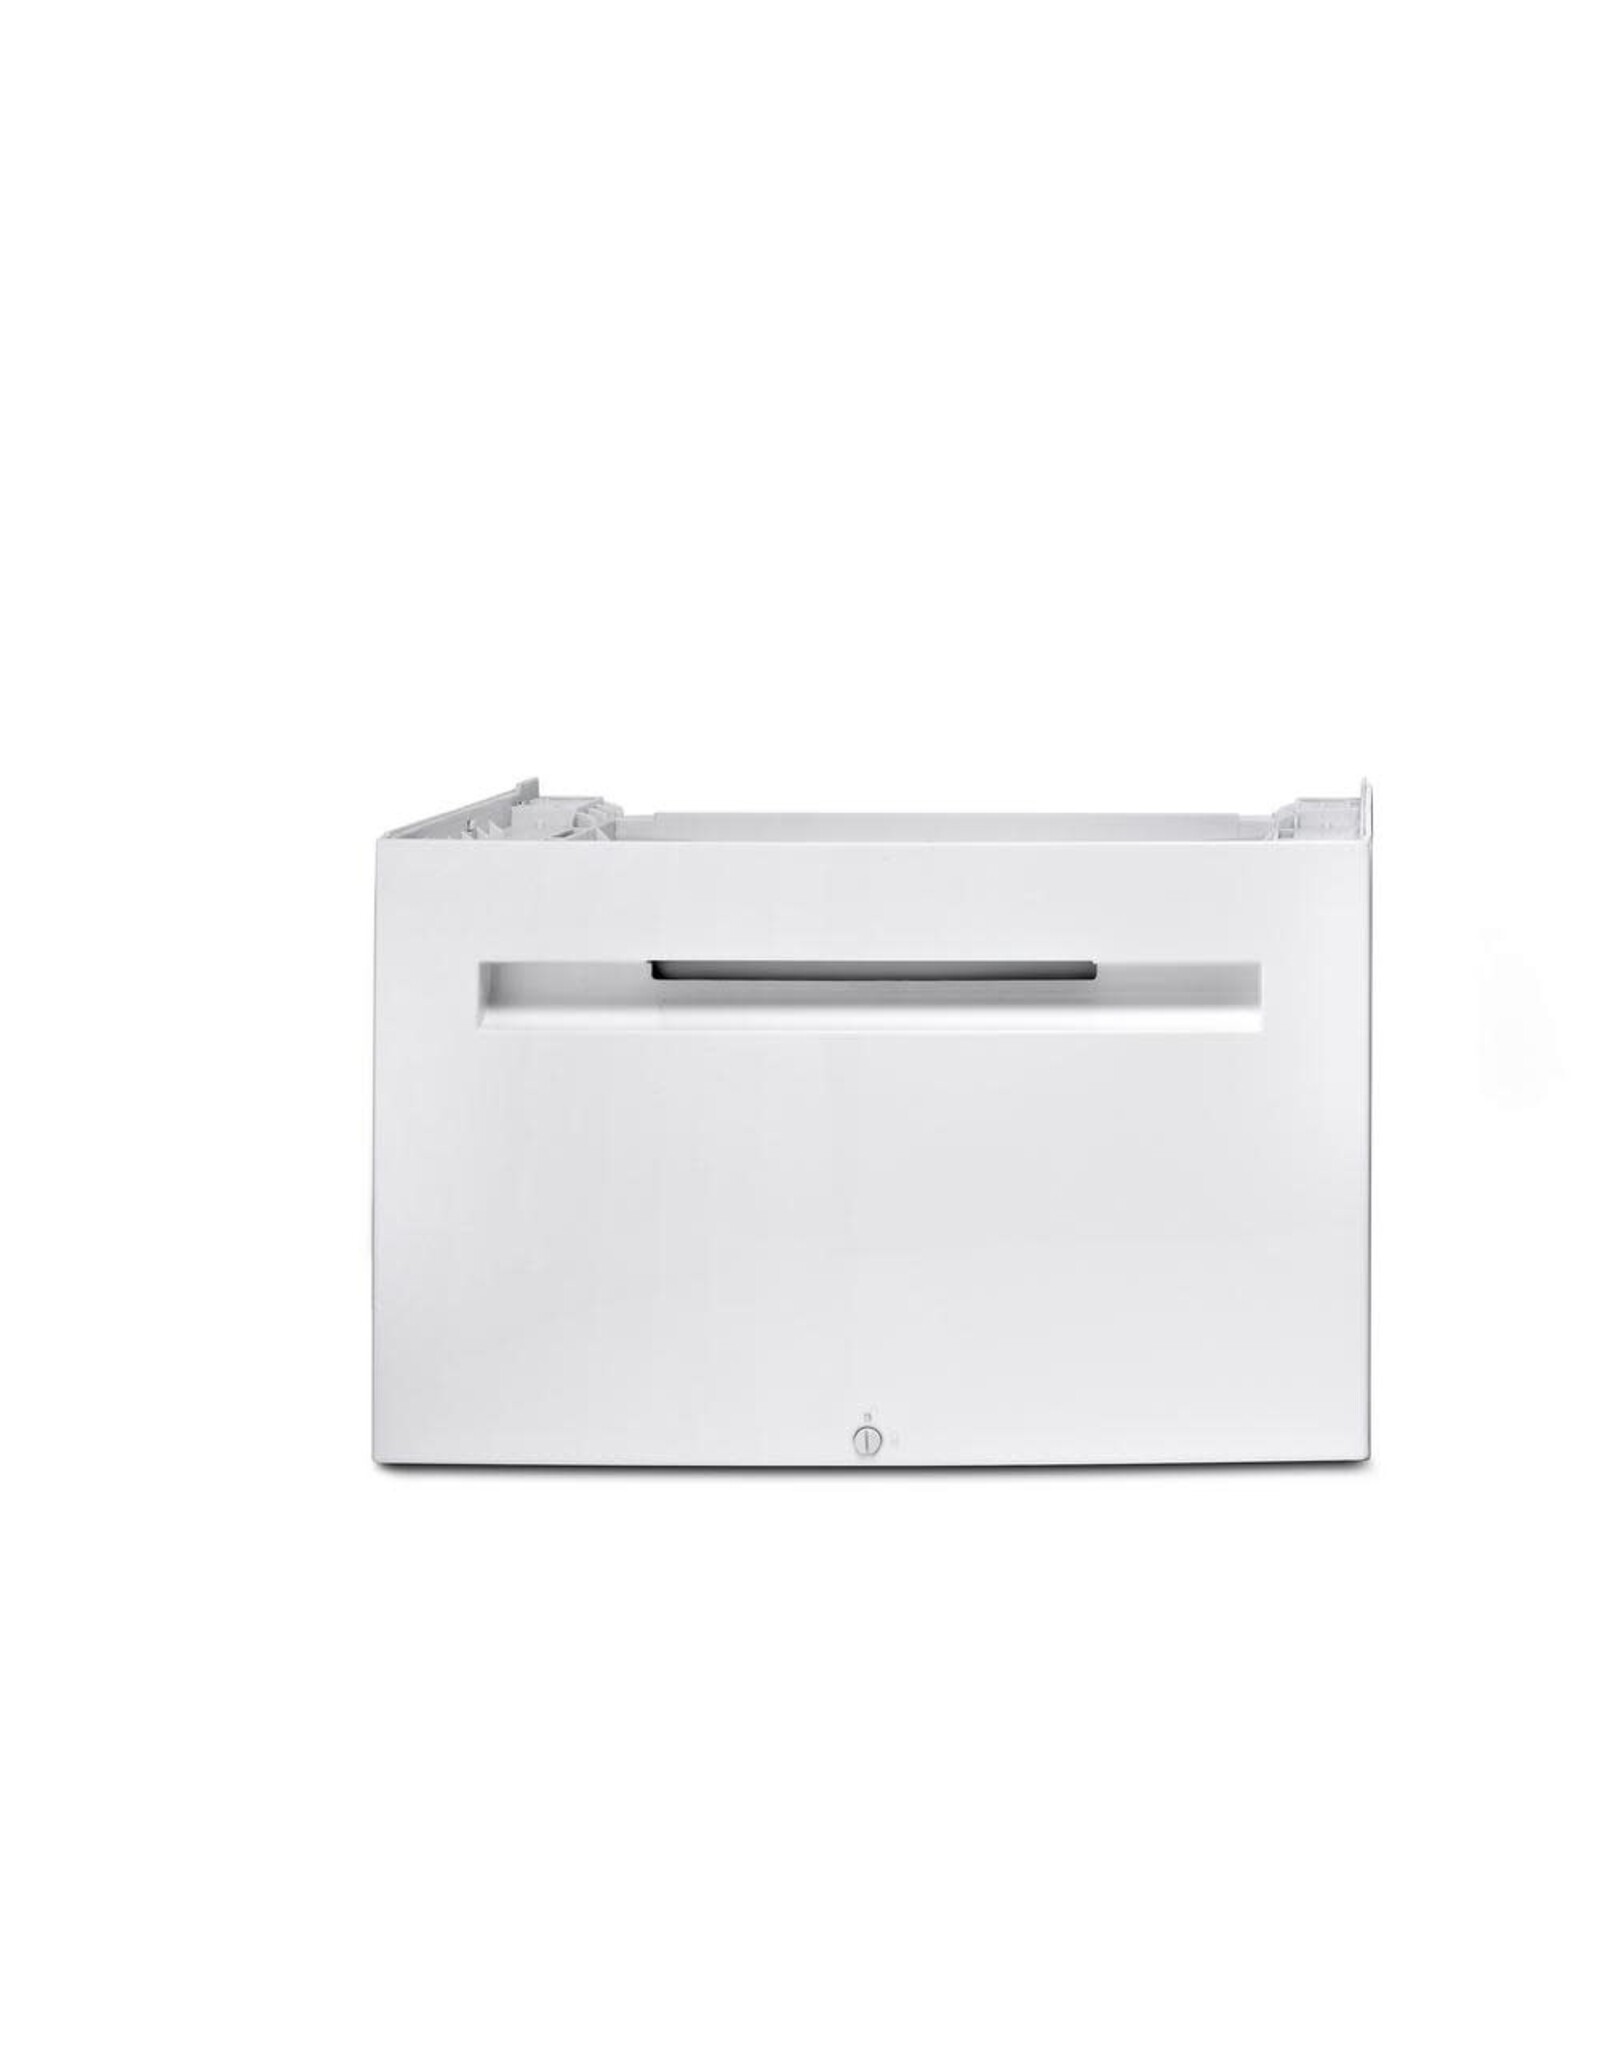 BOSCH WMZ20490 16 in. Laundry Washing Machine-only Pedestal with Storage Drawer in White